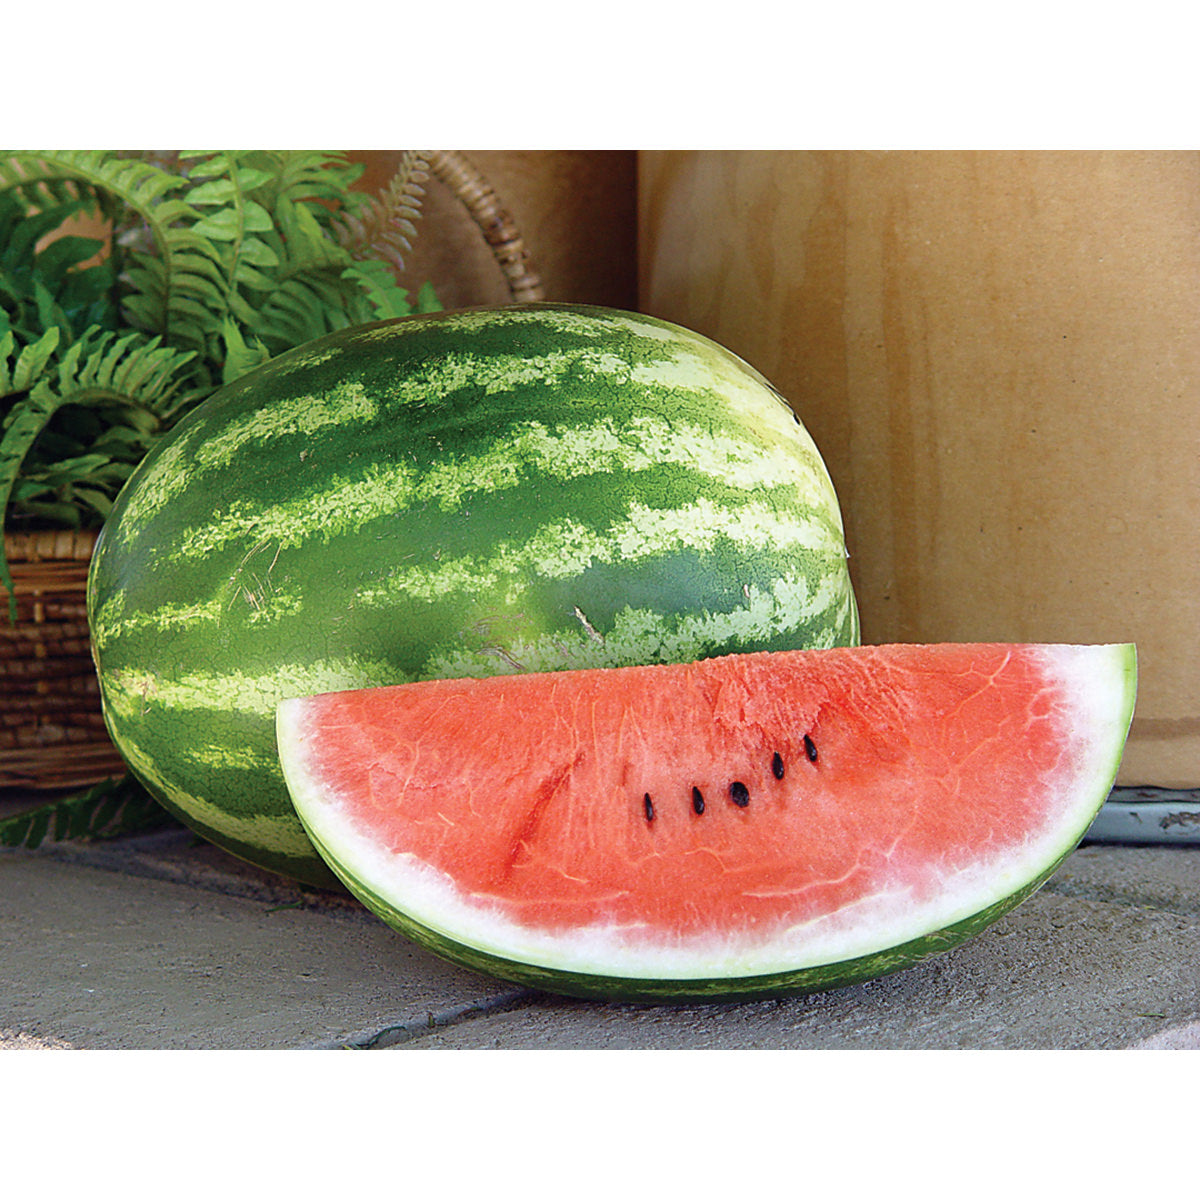 Playmate F1 Hybrid Watermelon Seeds